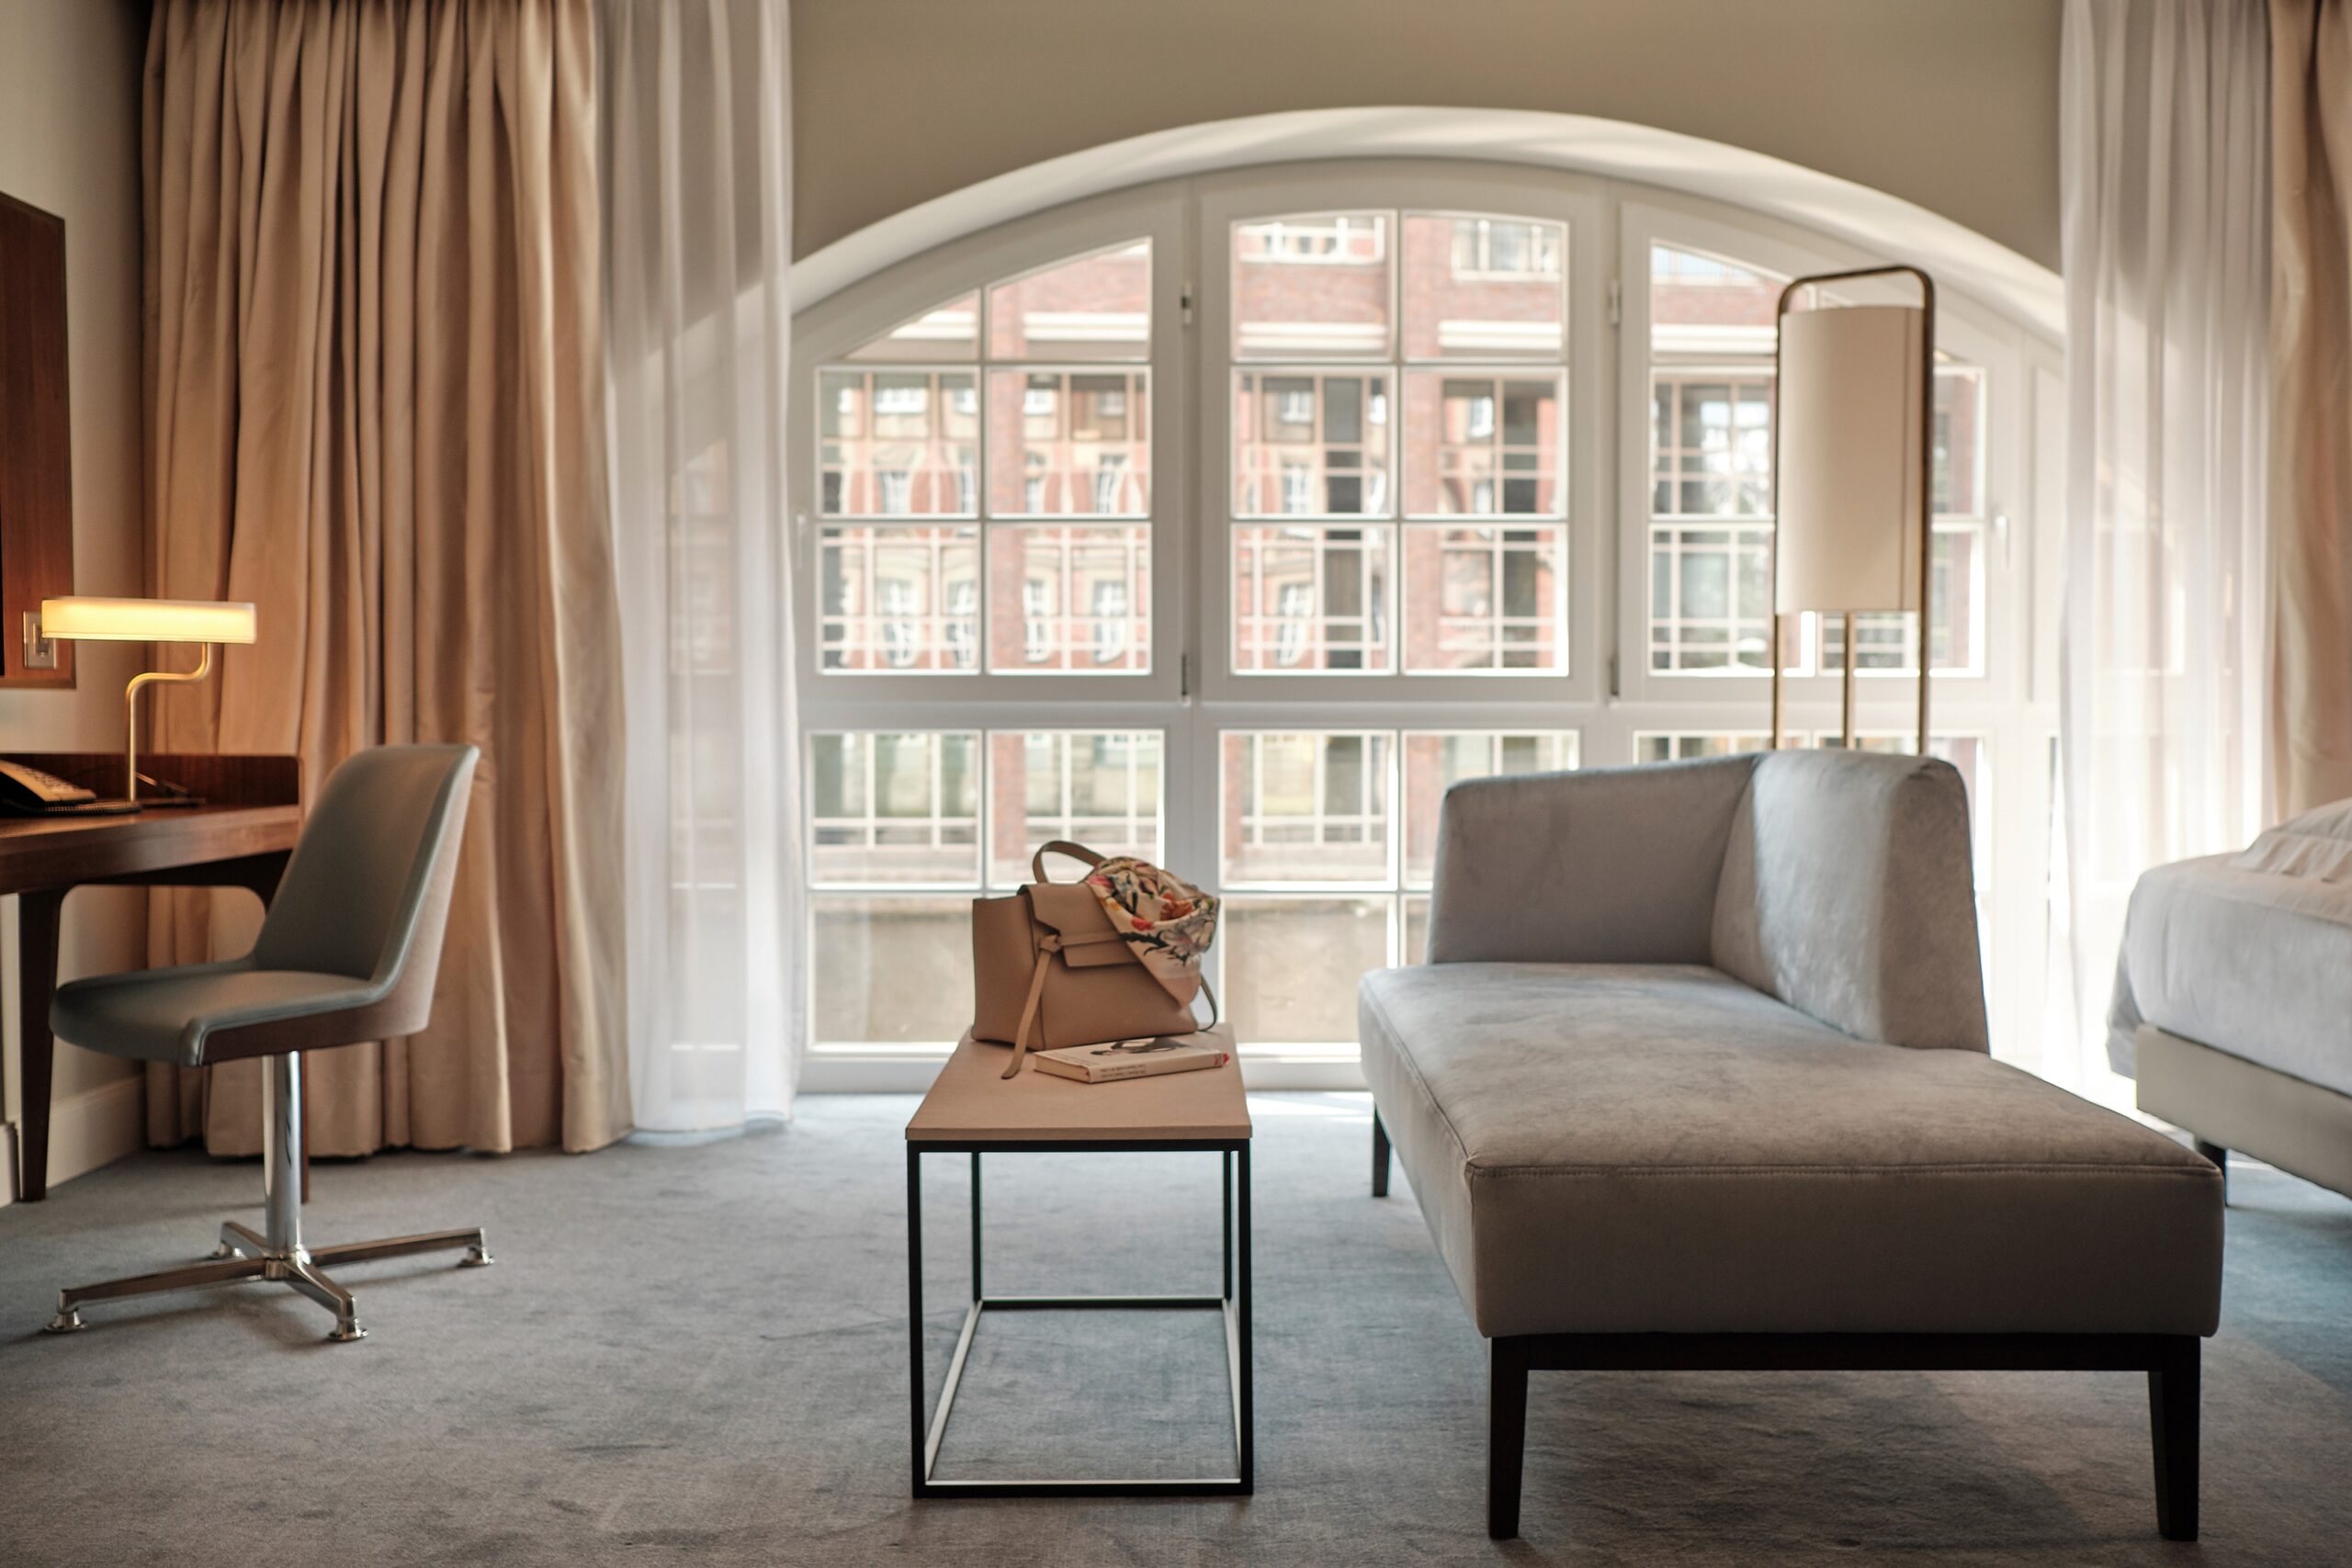 Fraser Suites Hamburg
Photo credit: JOI-Design IAD joehnk+partner